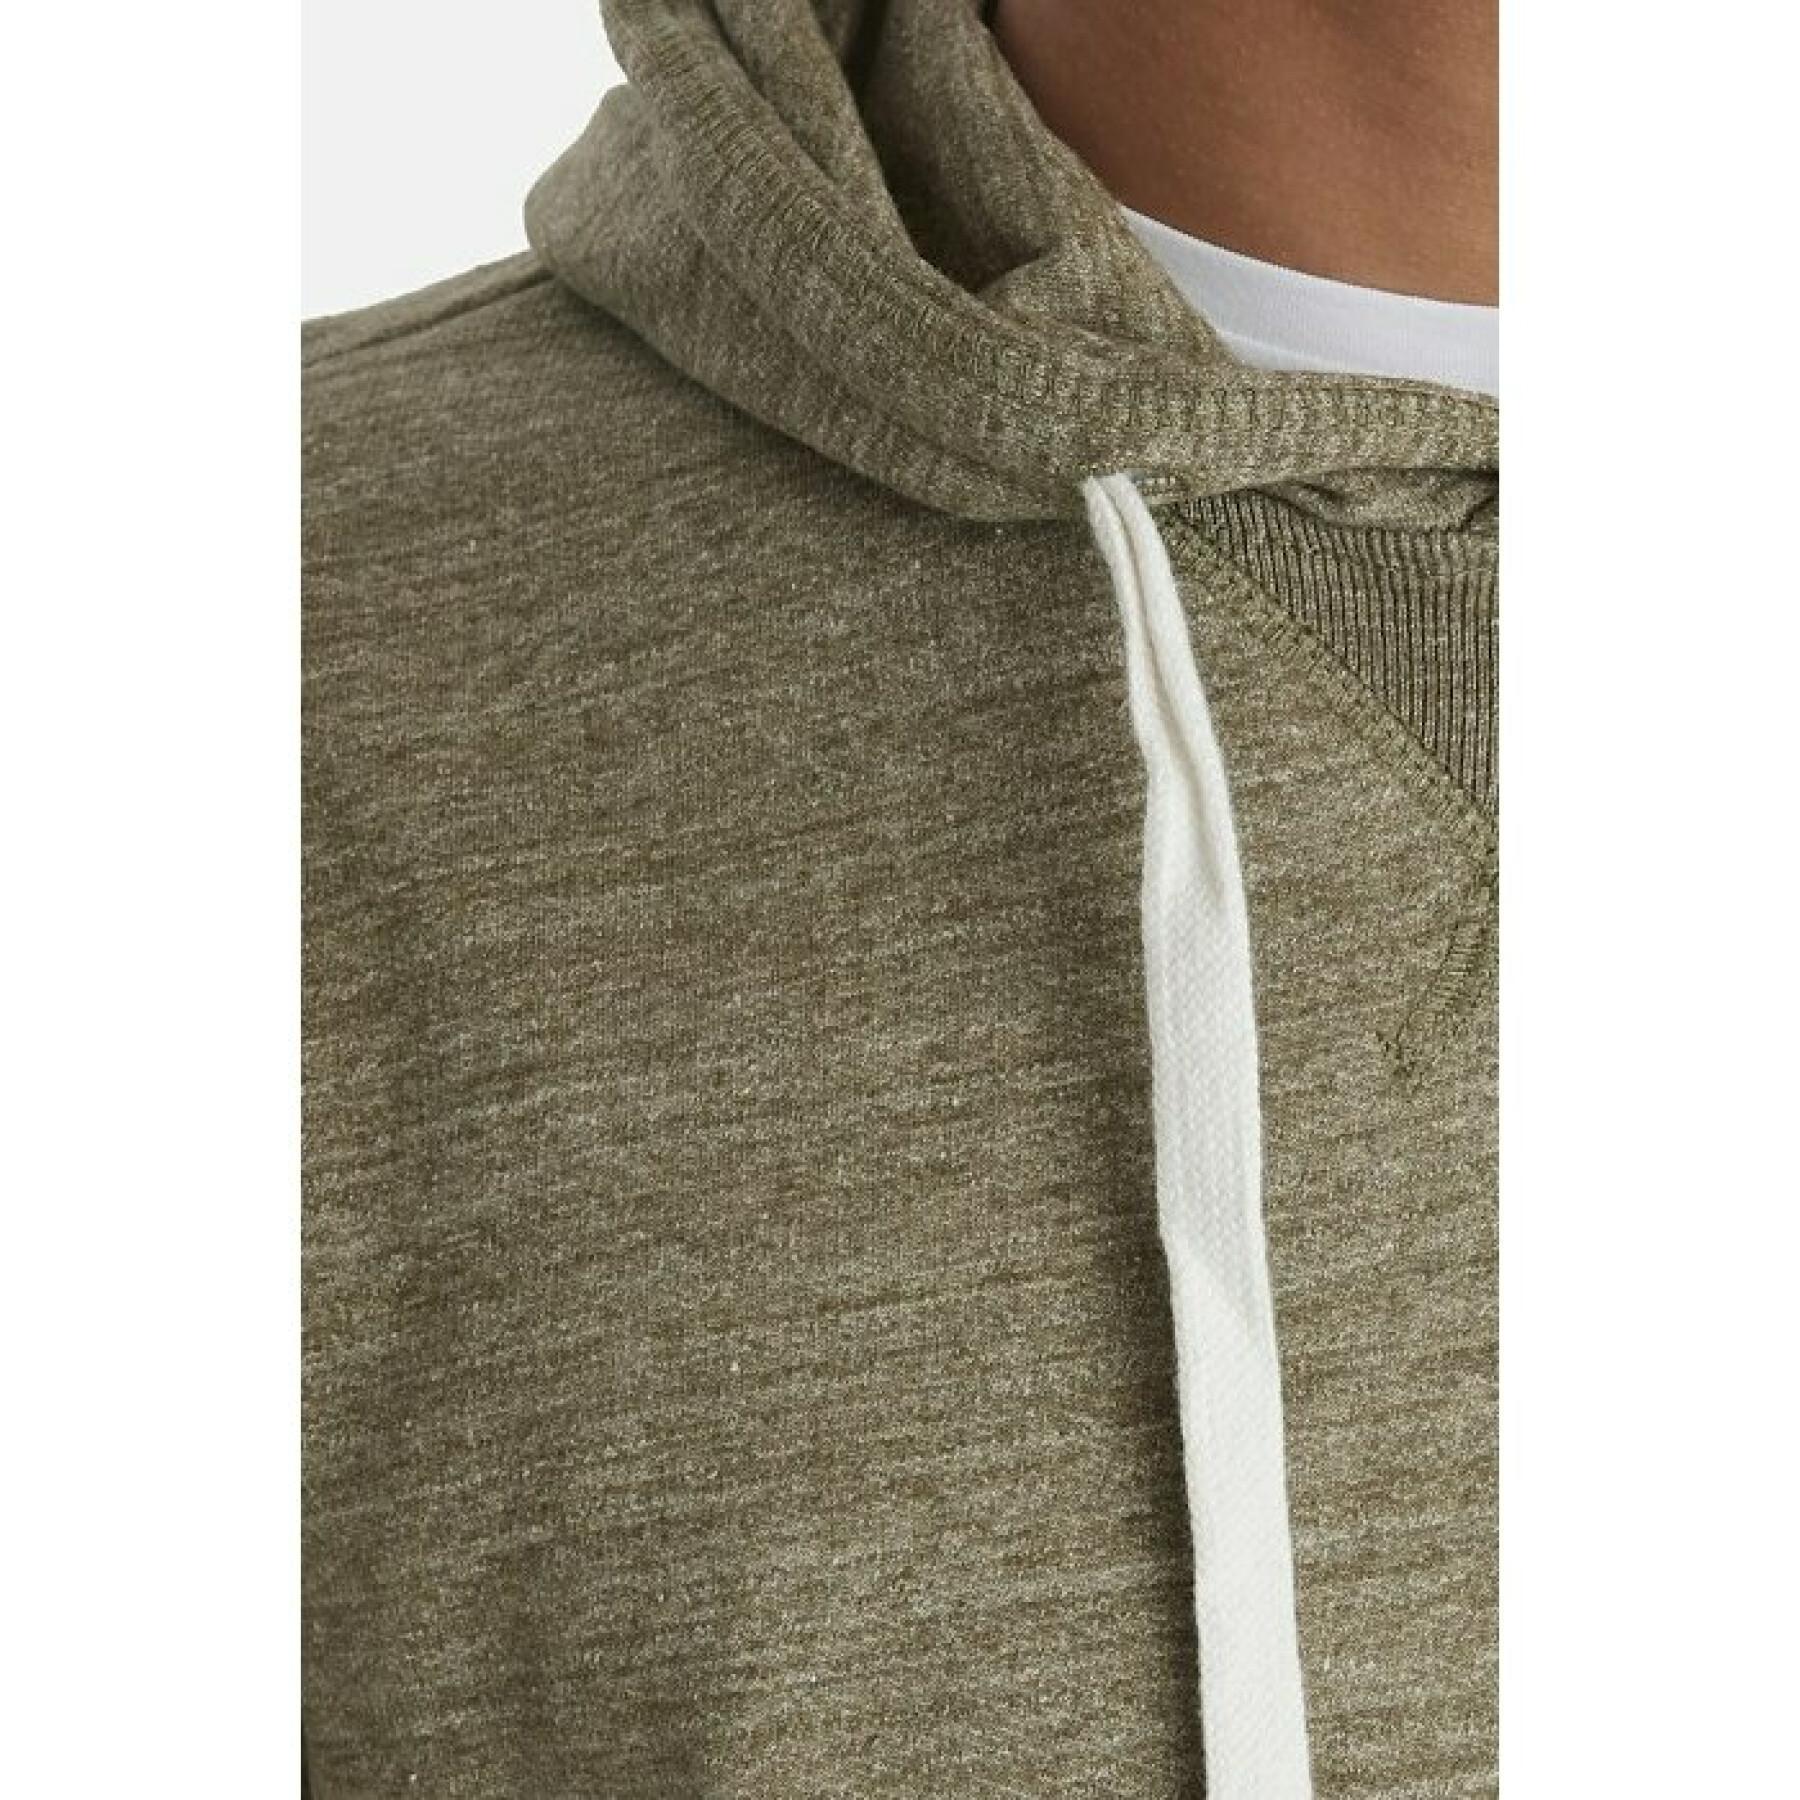 Hooded sweatshirt Blend bhalton